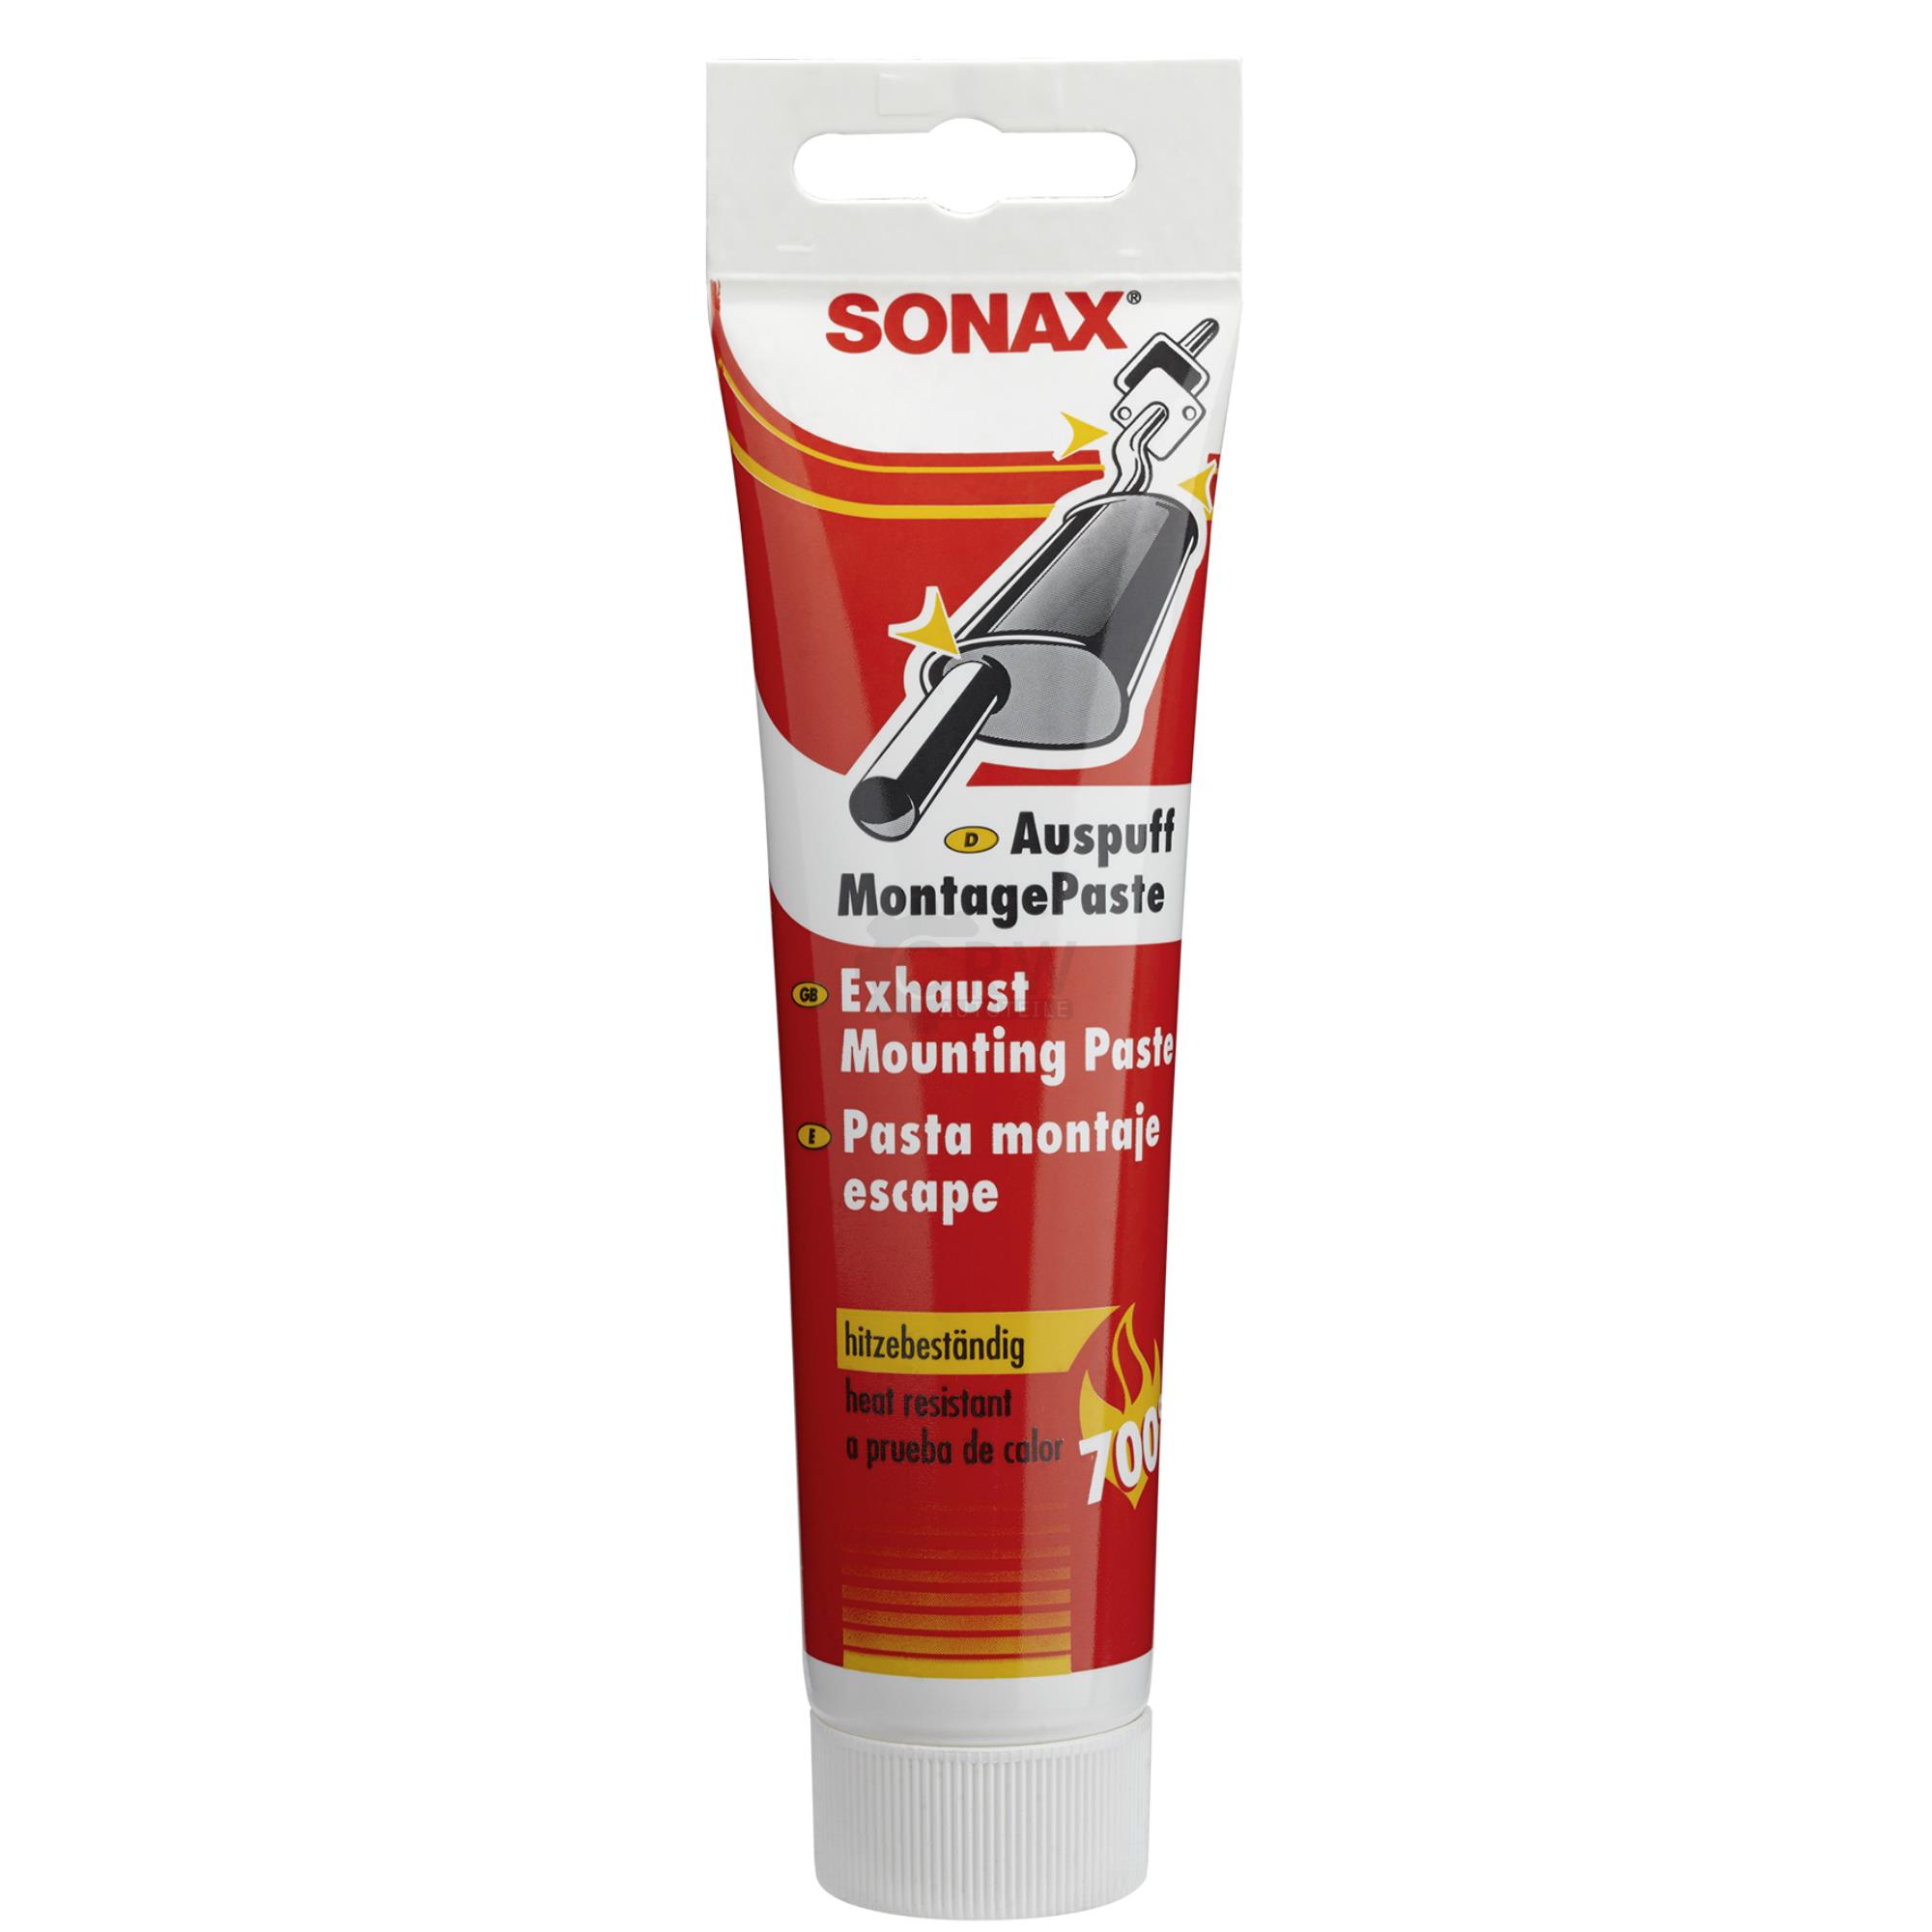 SONAX AuspuffMontagePaste Asbestfrei Hitzebeständig Montagepaste 170ml